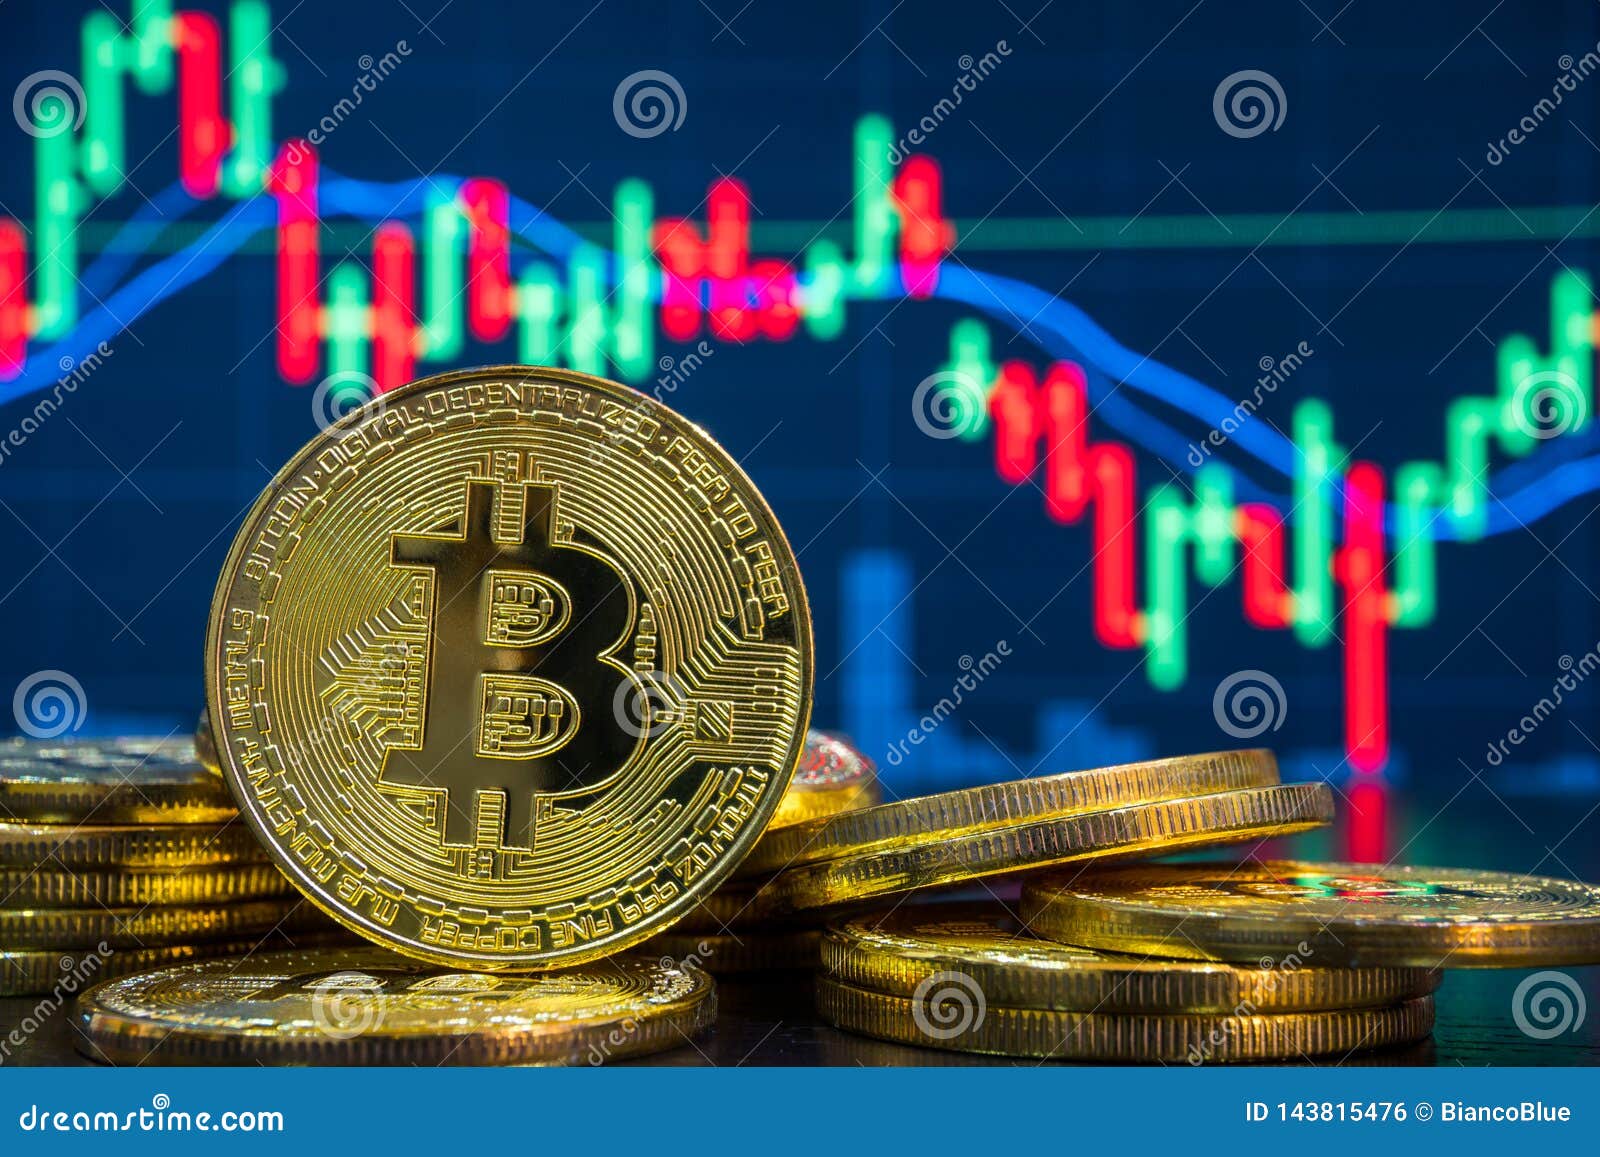 sorpresa btc bitcoin arbitrage trading corea